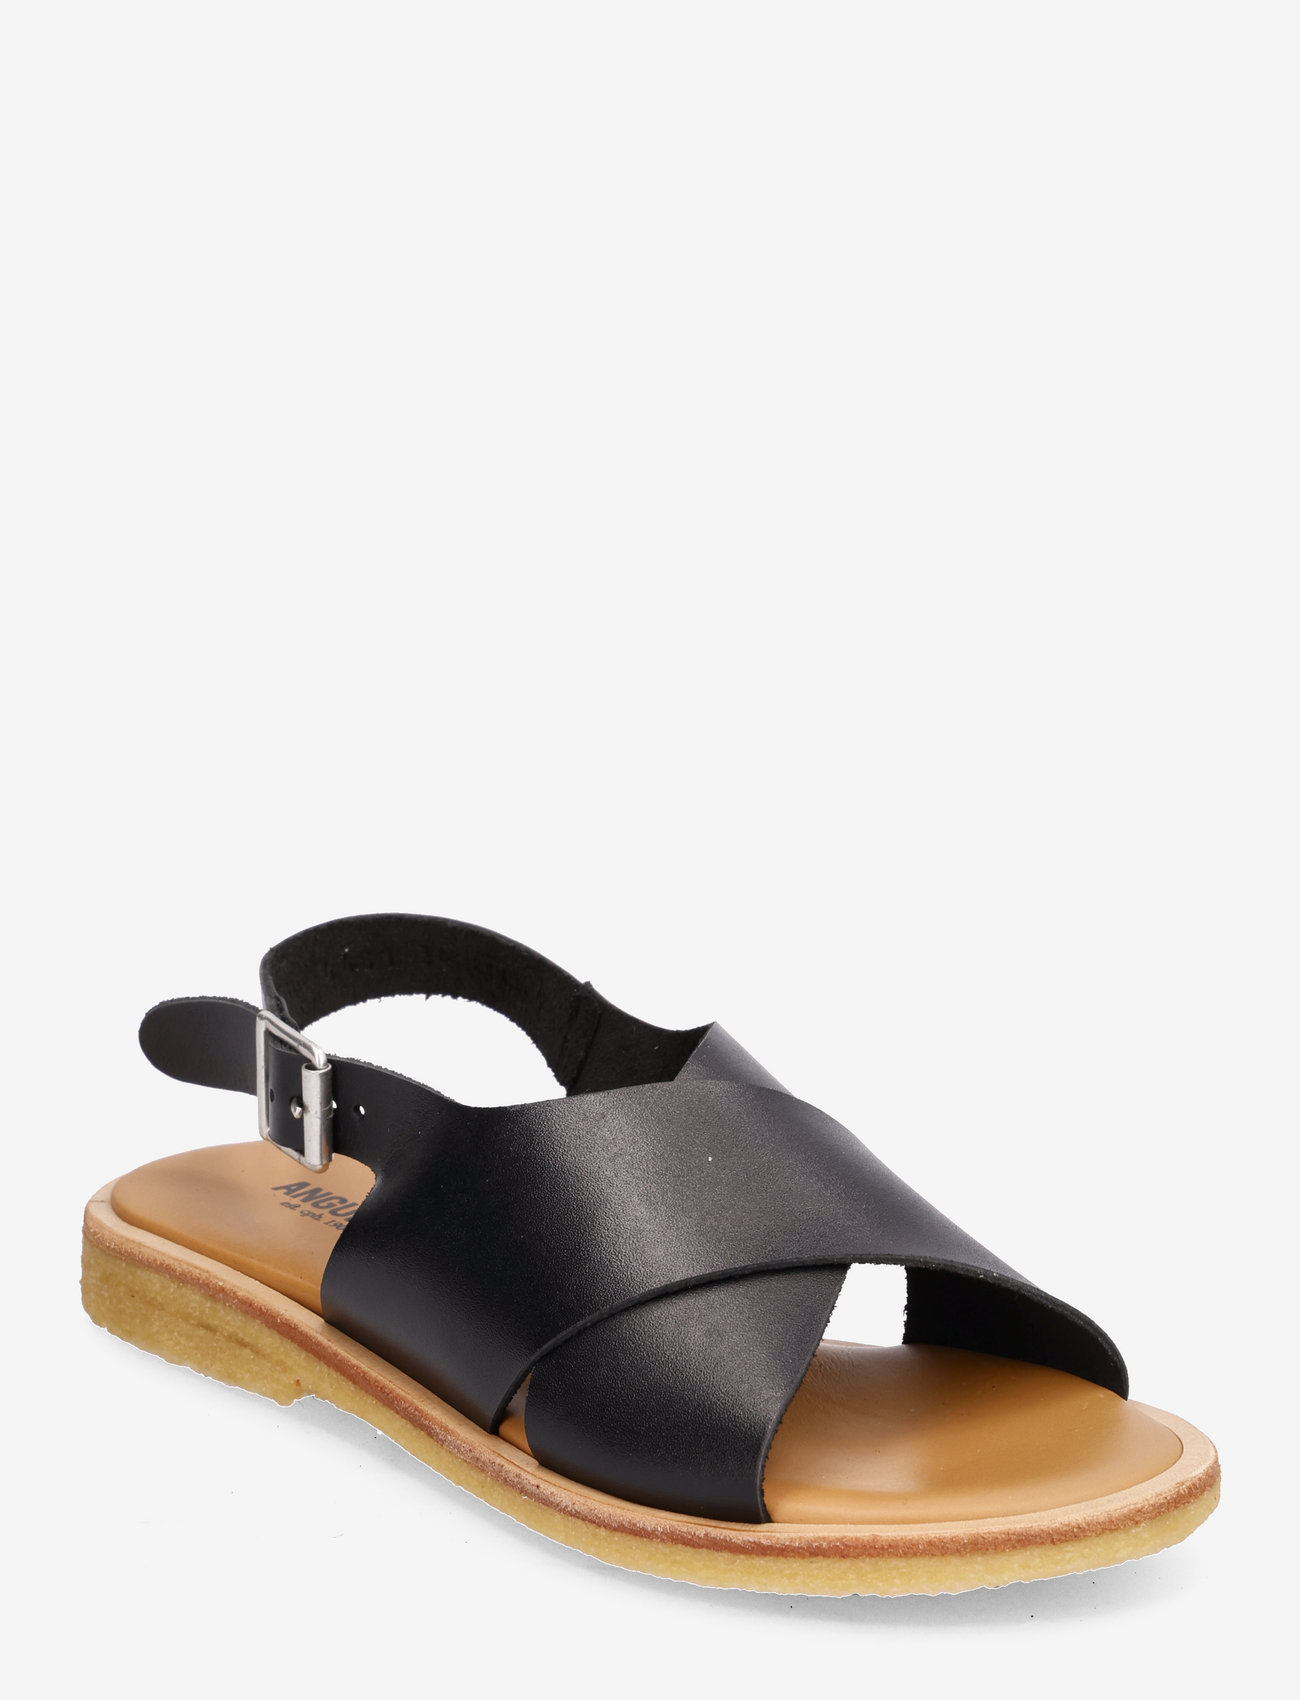 ANGULUS - Sandals - flat - open toe - op - summer savings - 1785 black - 0